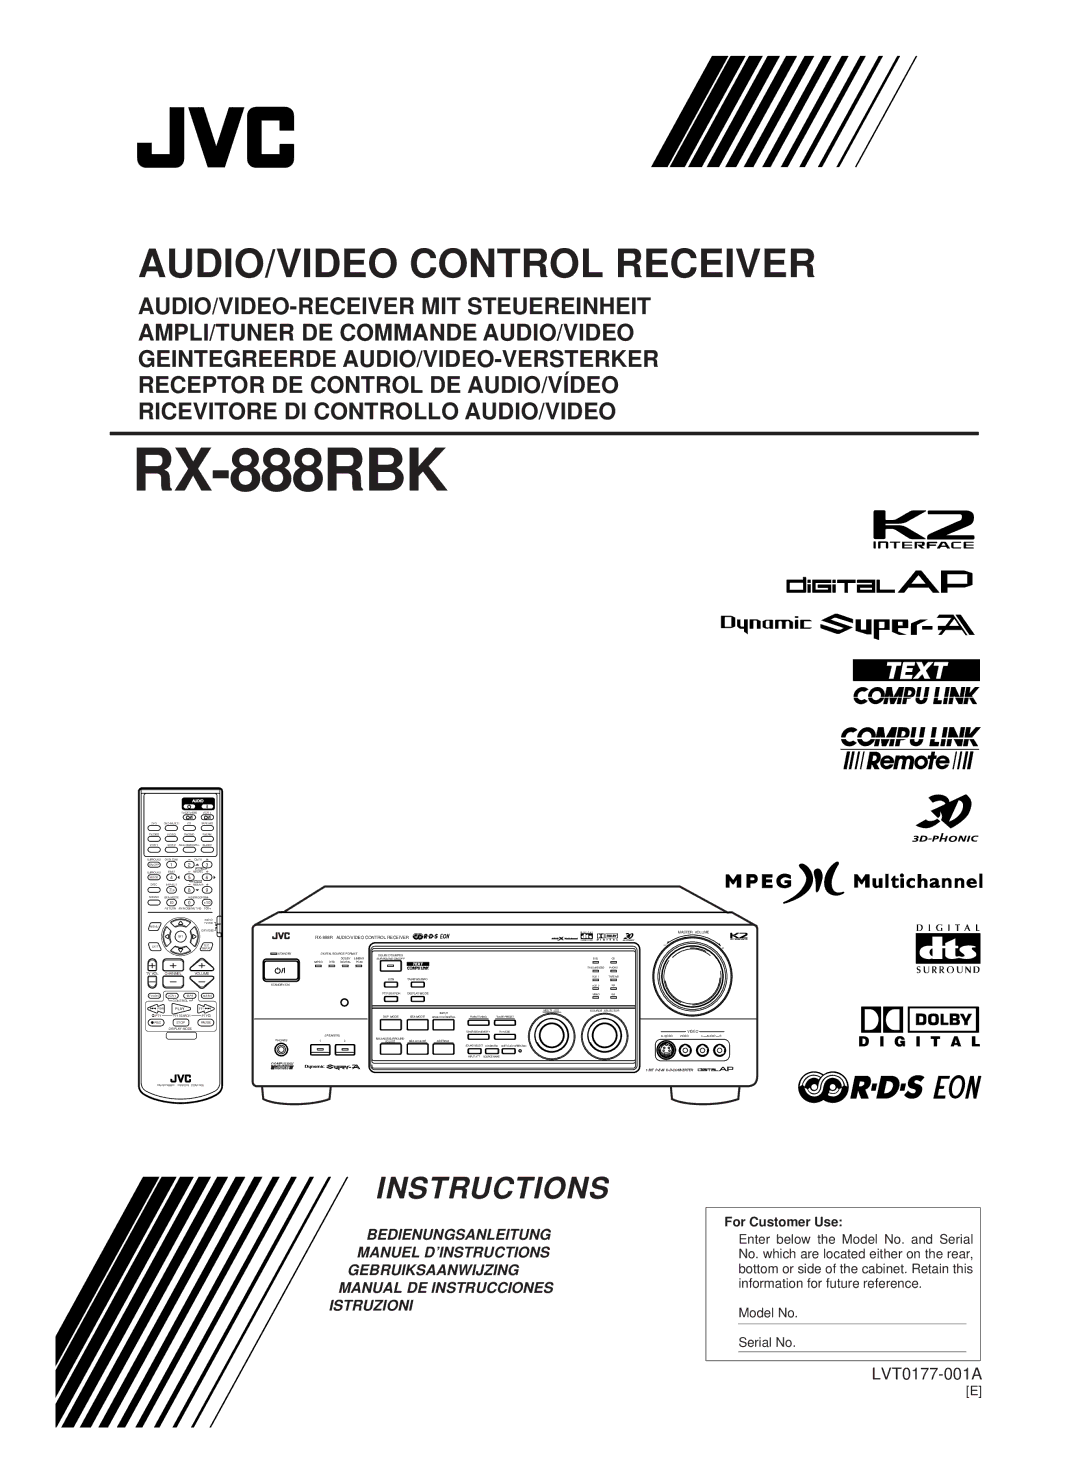 JVC RX-888RBK manual 